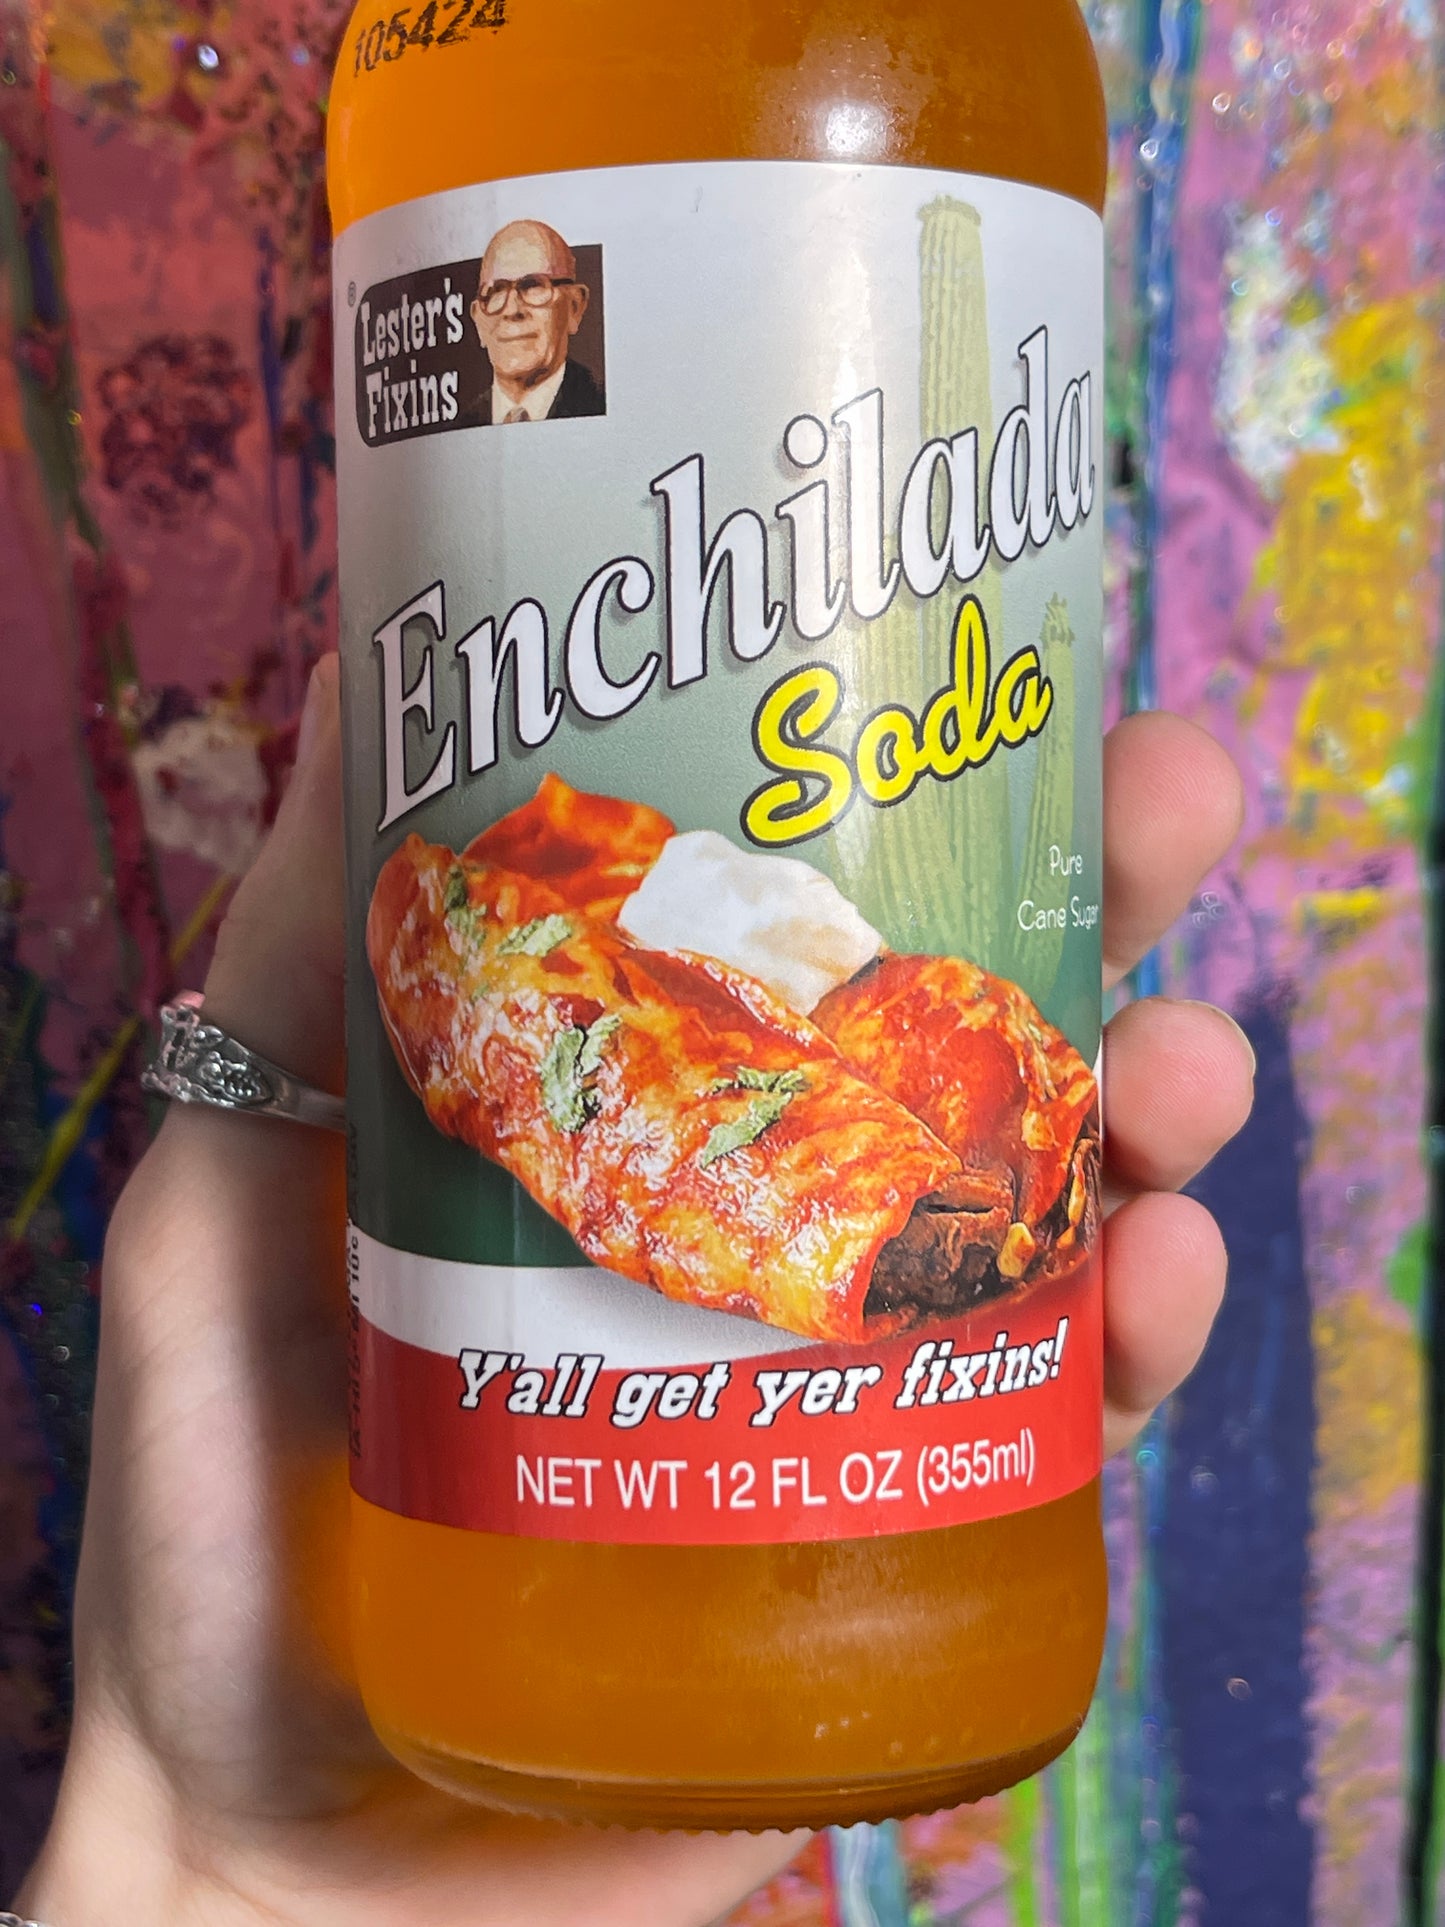 Lester’s Fixins Enchilada Soda